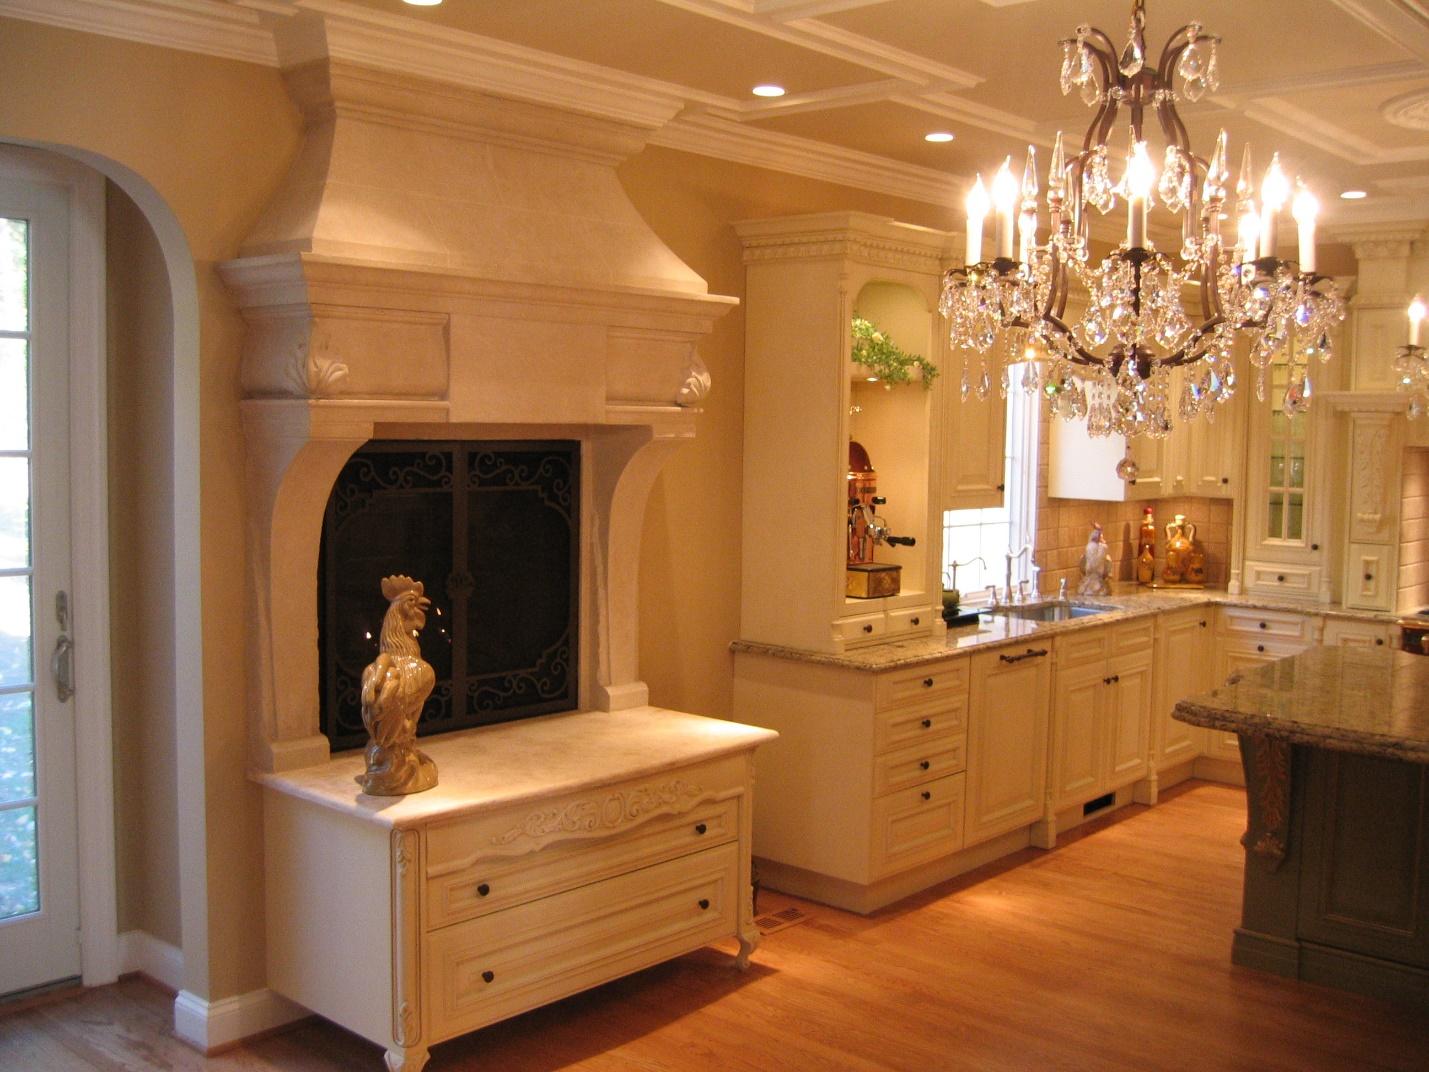 Classic Kitchen Cabinet Design